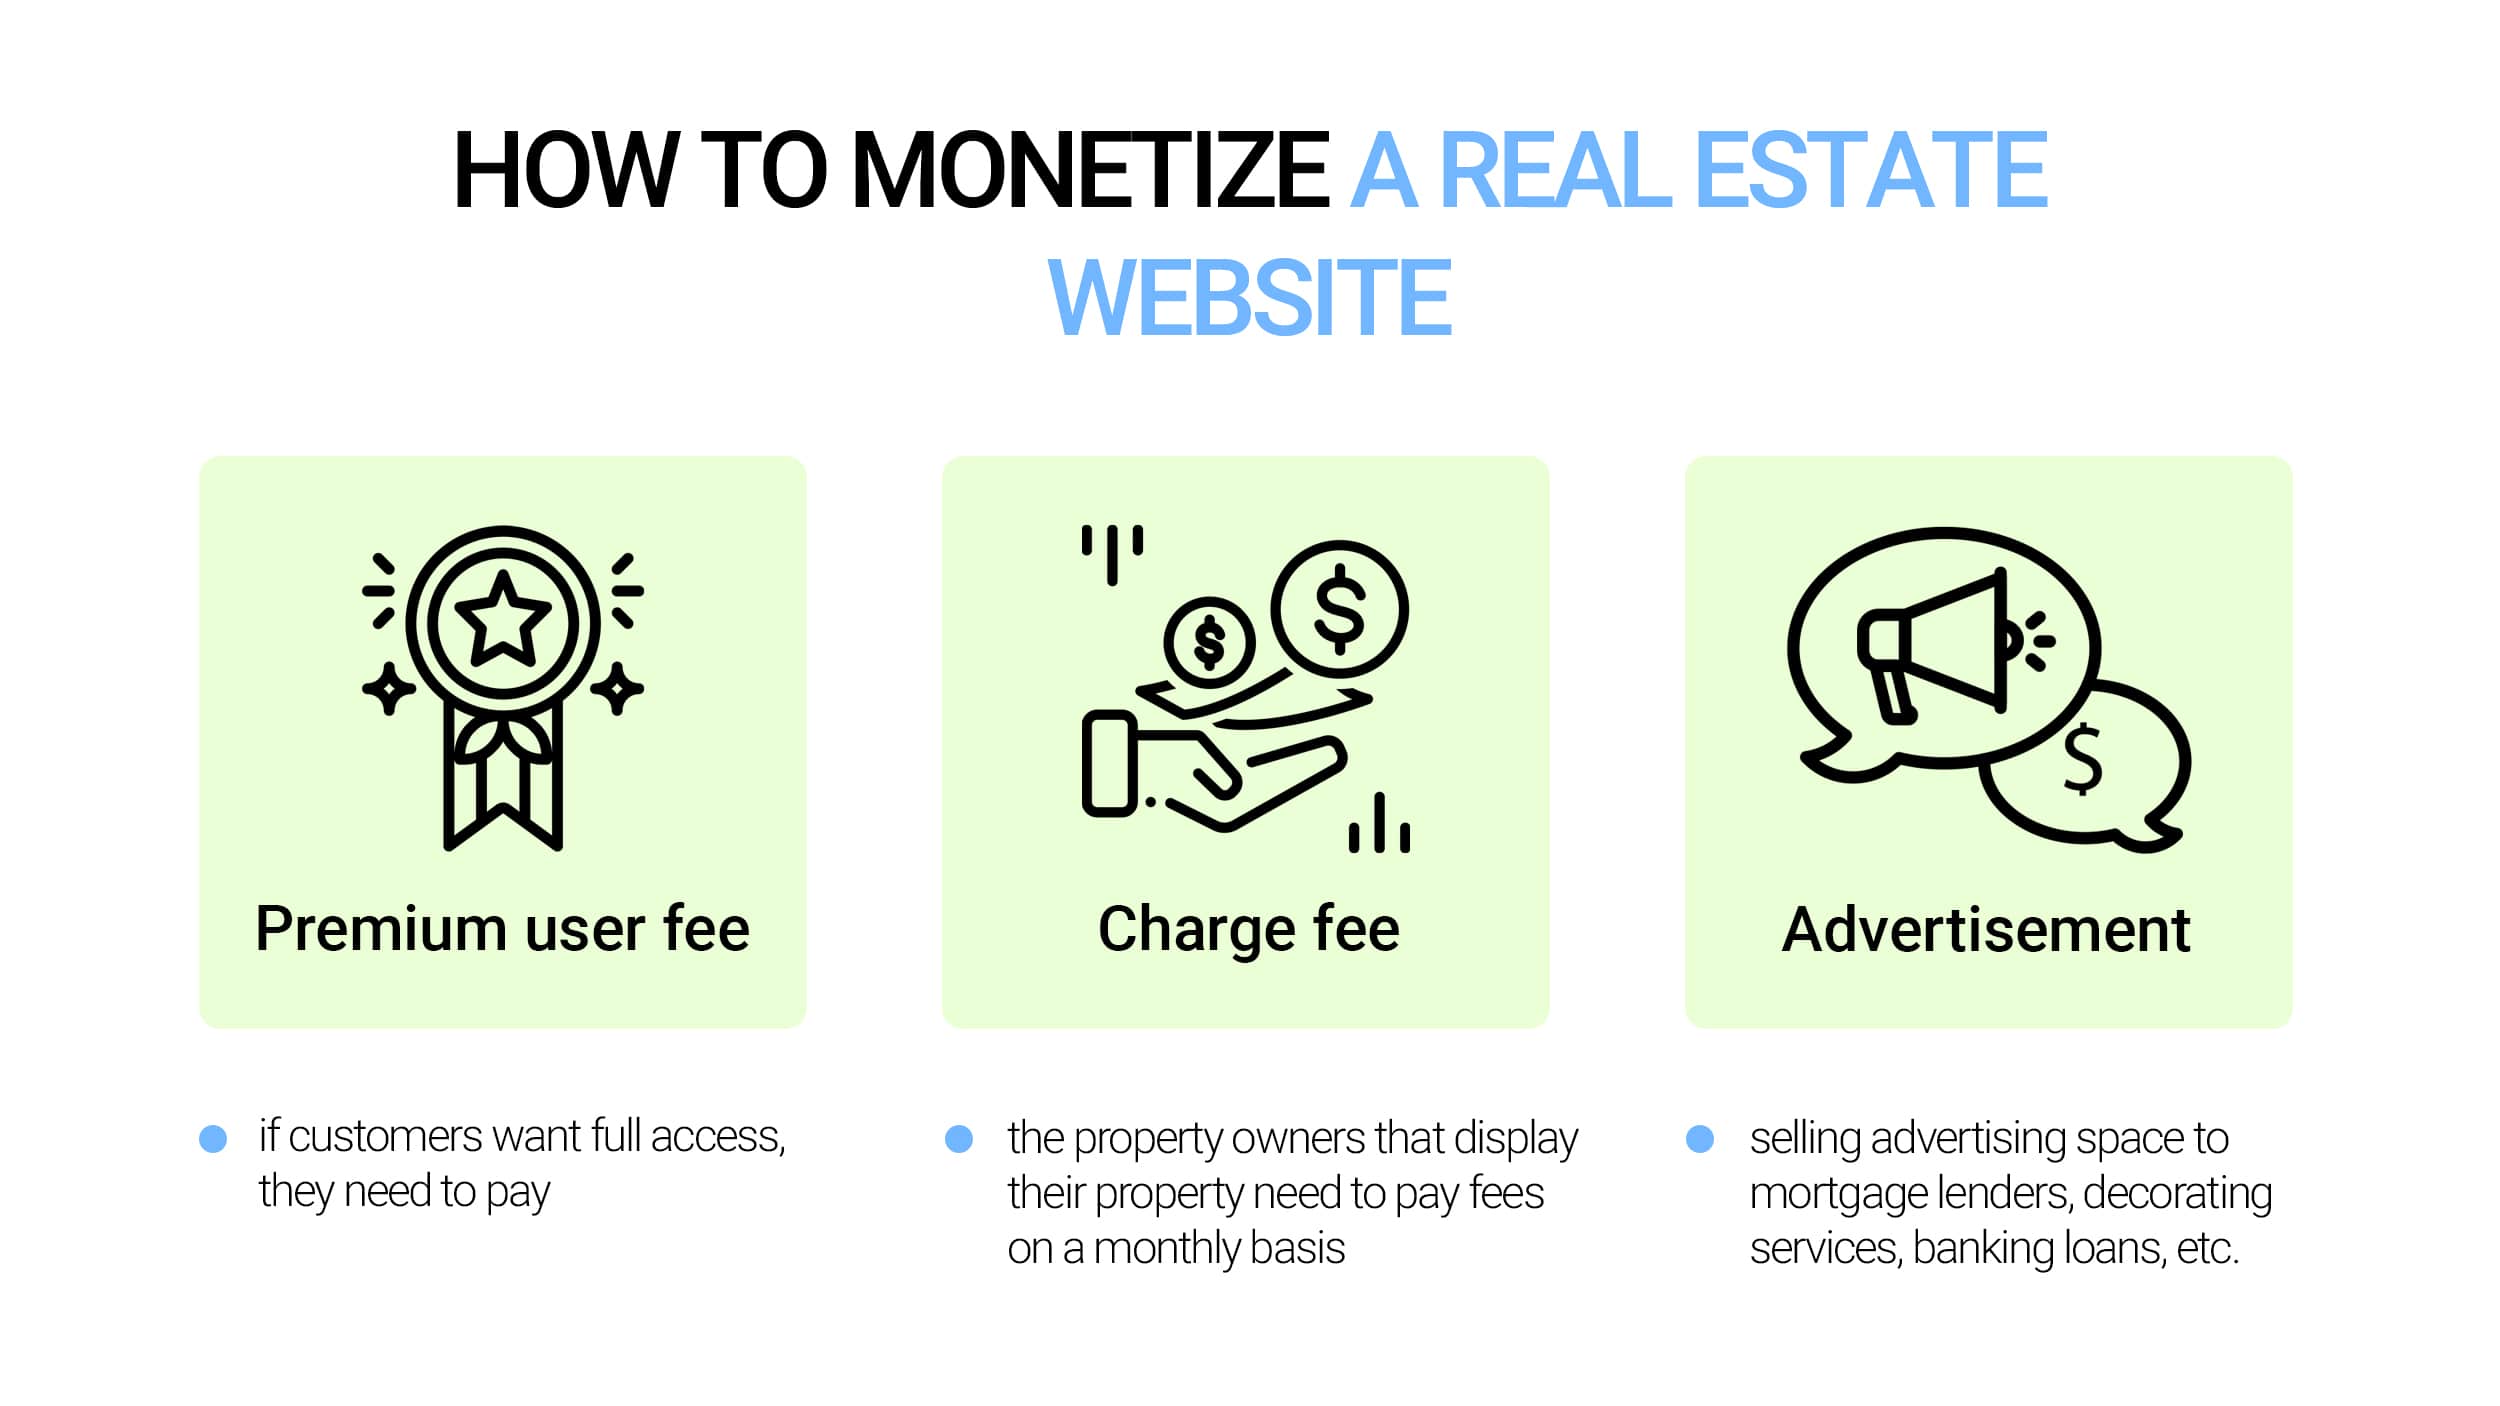 Monetization strategies for real estate websites